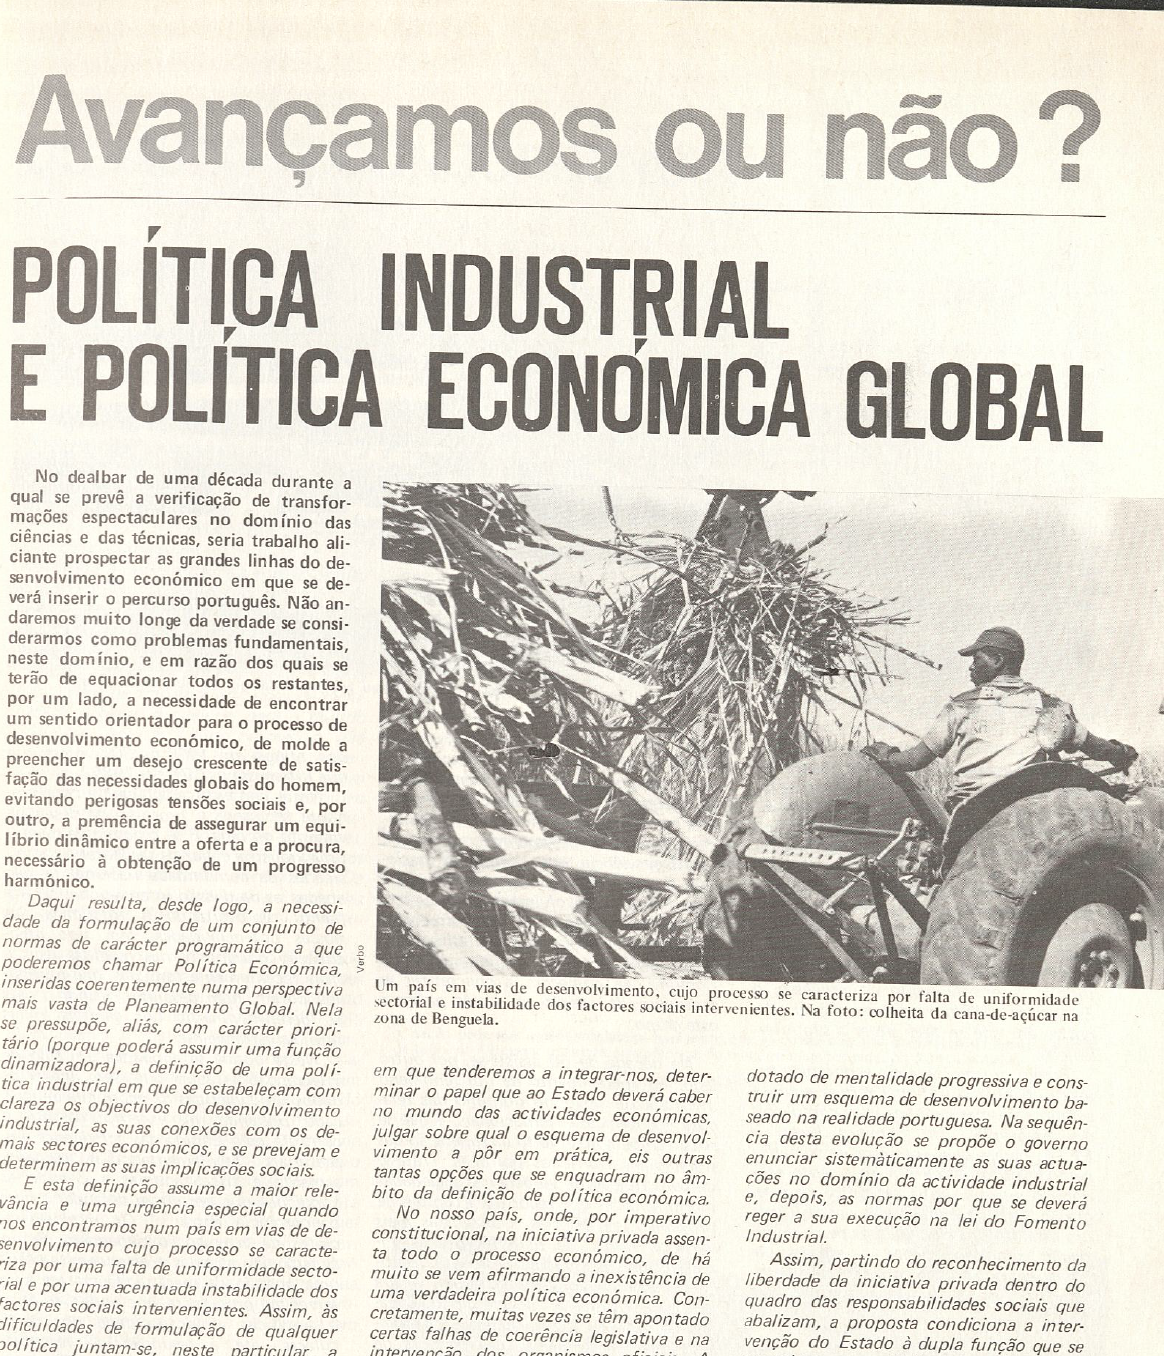 "Política Industrial e política económica global"